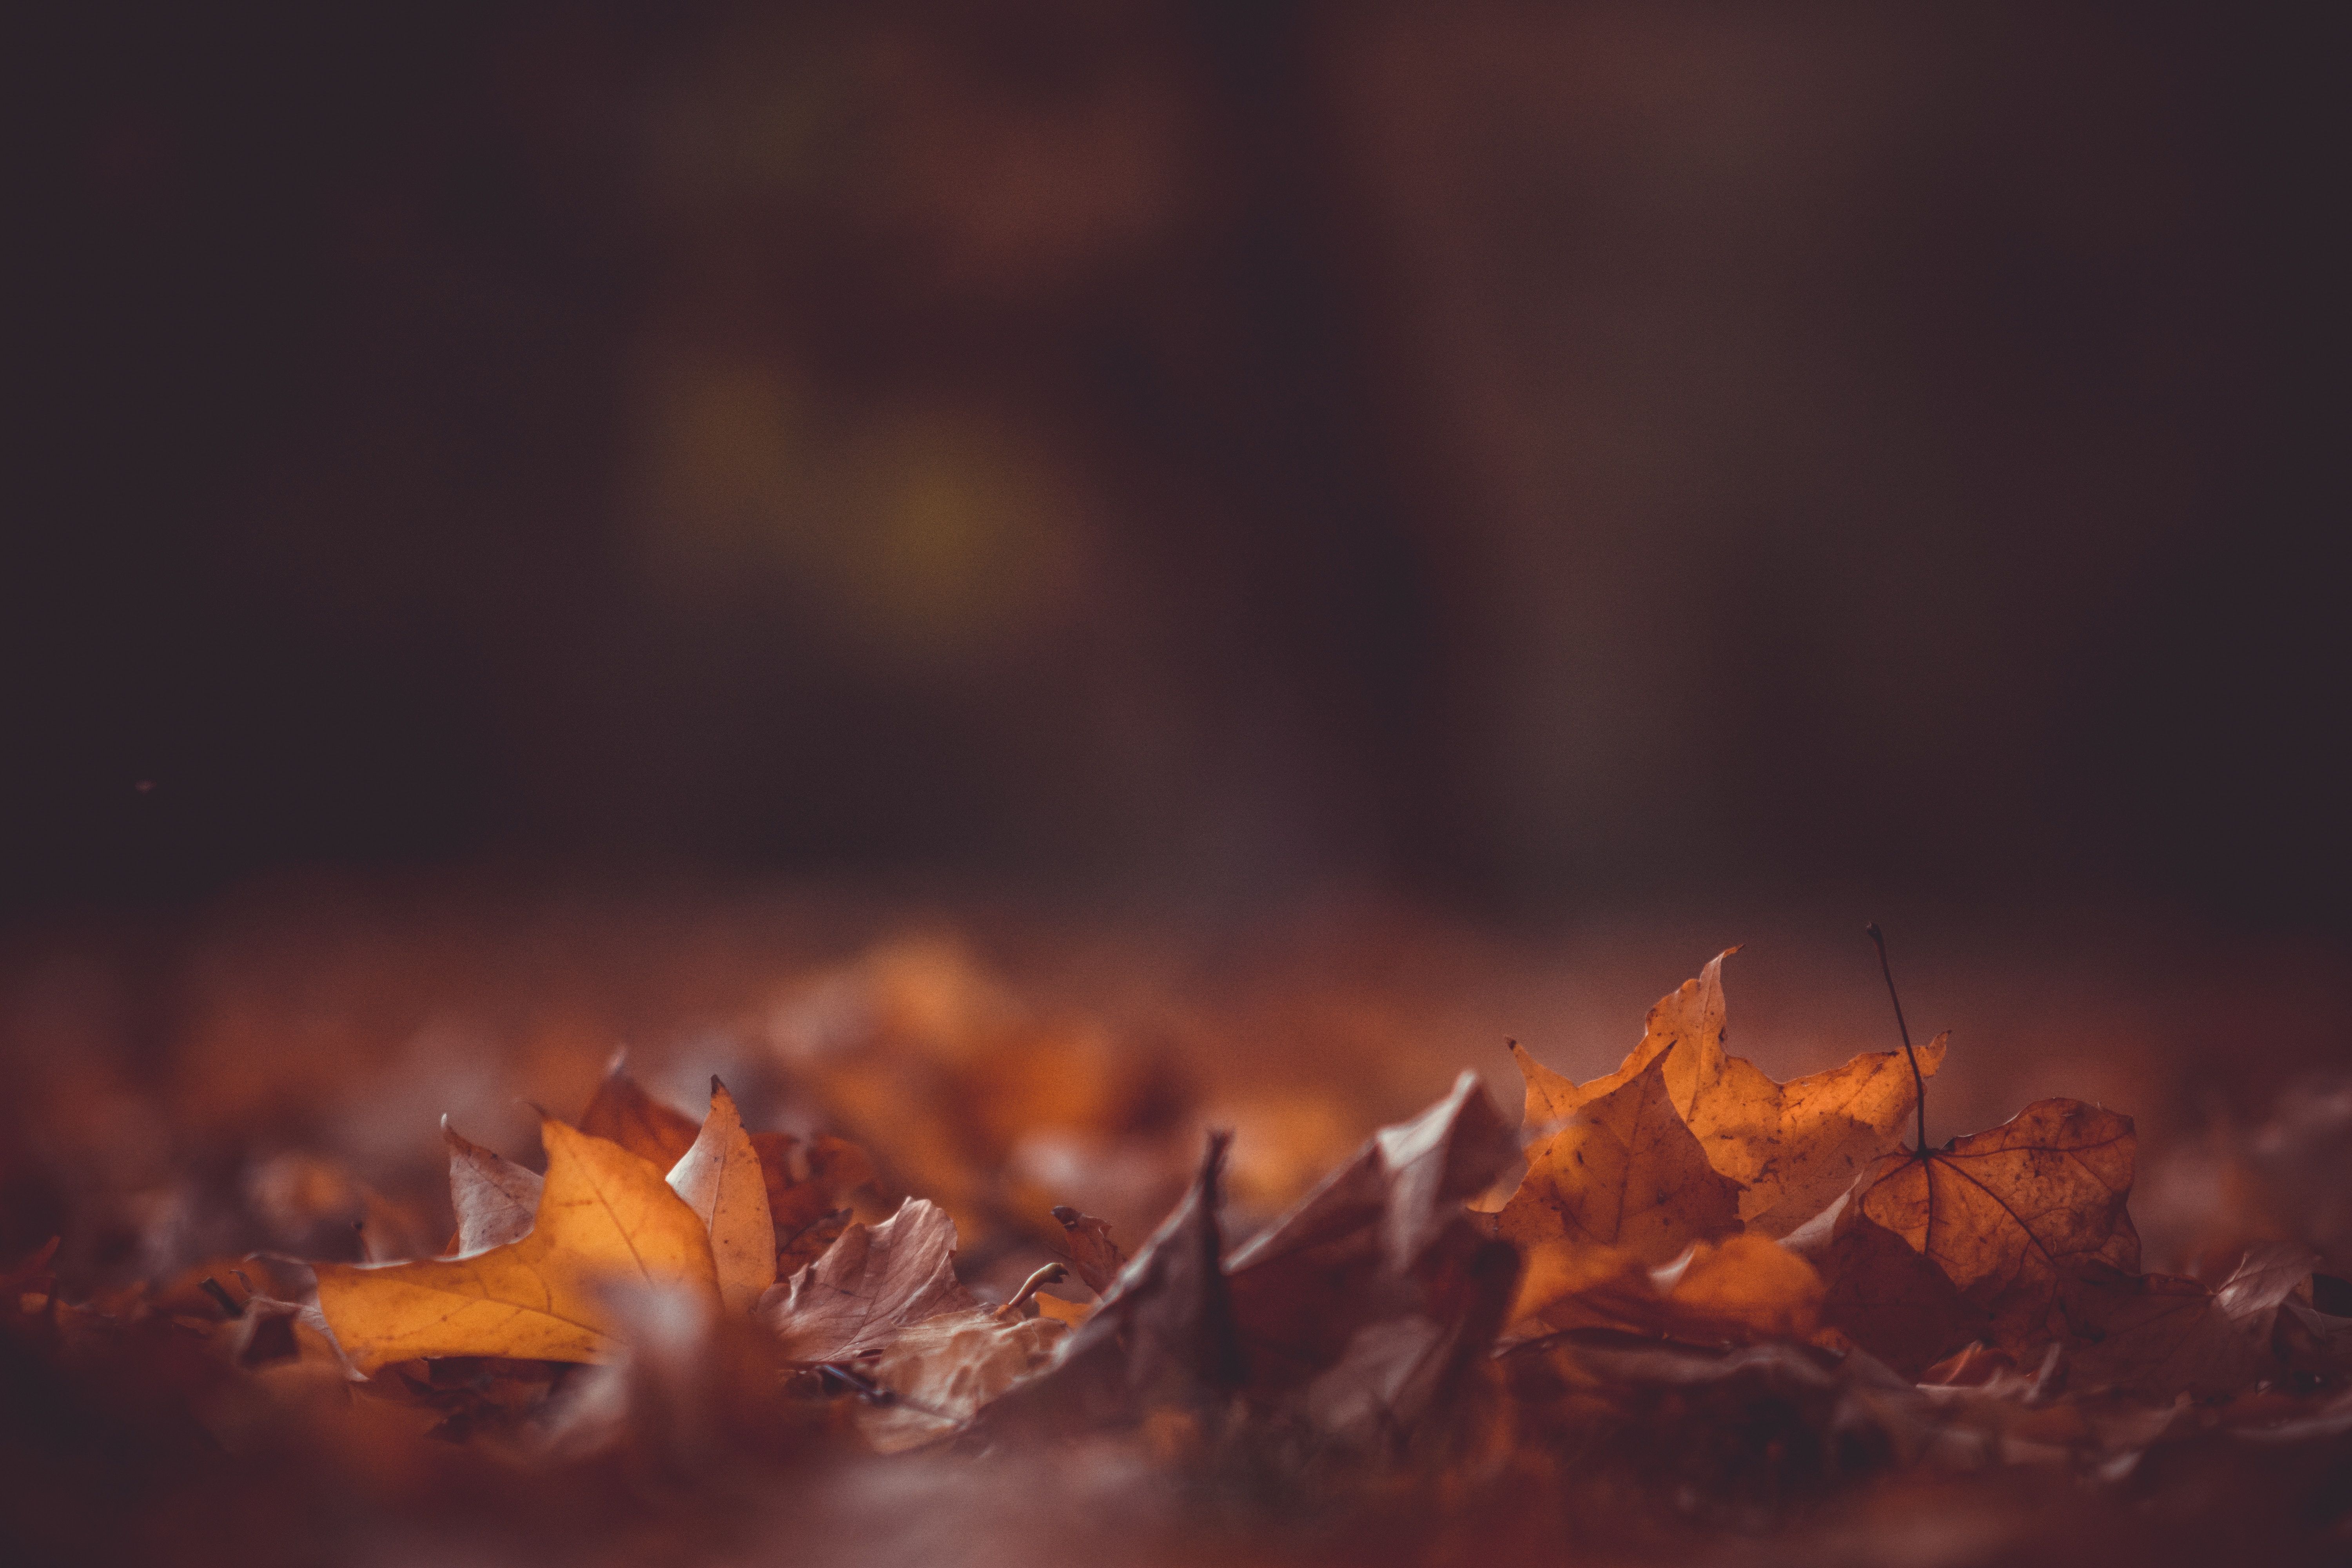 6000x4000 #wallpaper, #ground, #blury, #season, #pile, #bokeh, #Free image, #fall background, #dark, #forest, #leafe, #harvest, #fall, #moody, #blur, #autumn, #fall wallpaper, #red, #black, #orange, #leaf. Mocah.org HD Desktop Wallpaper